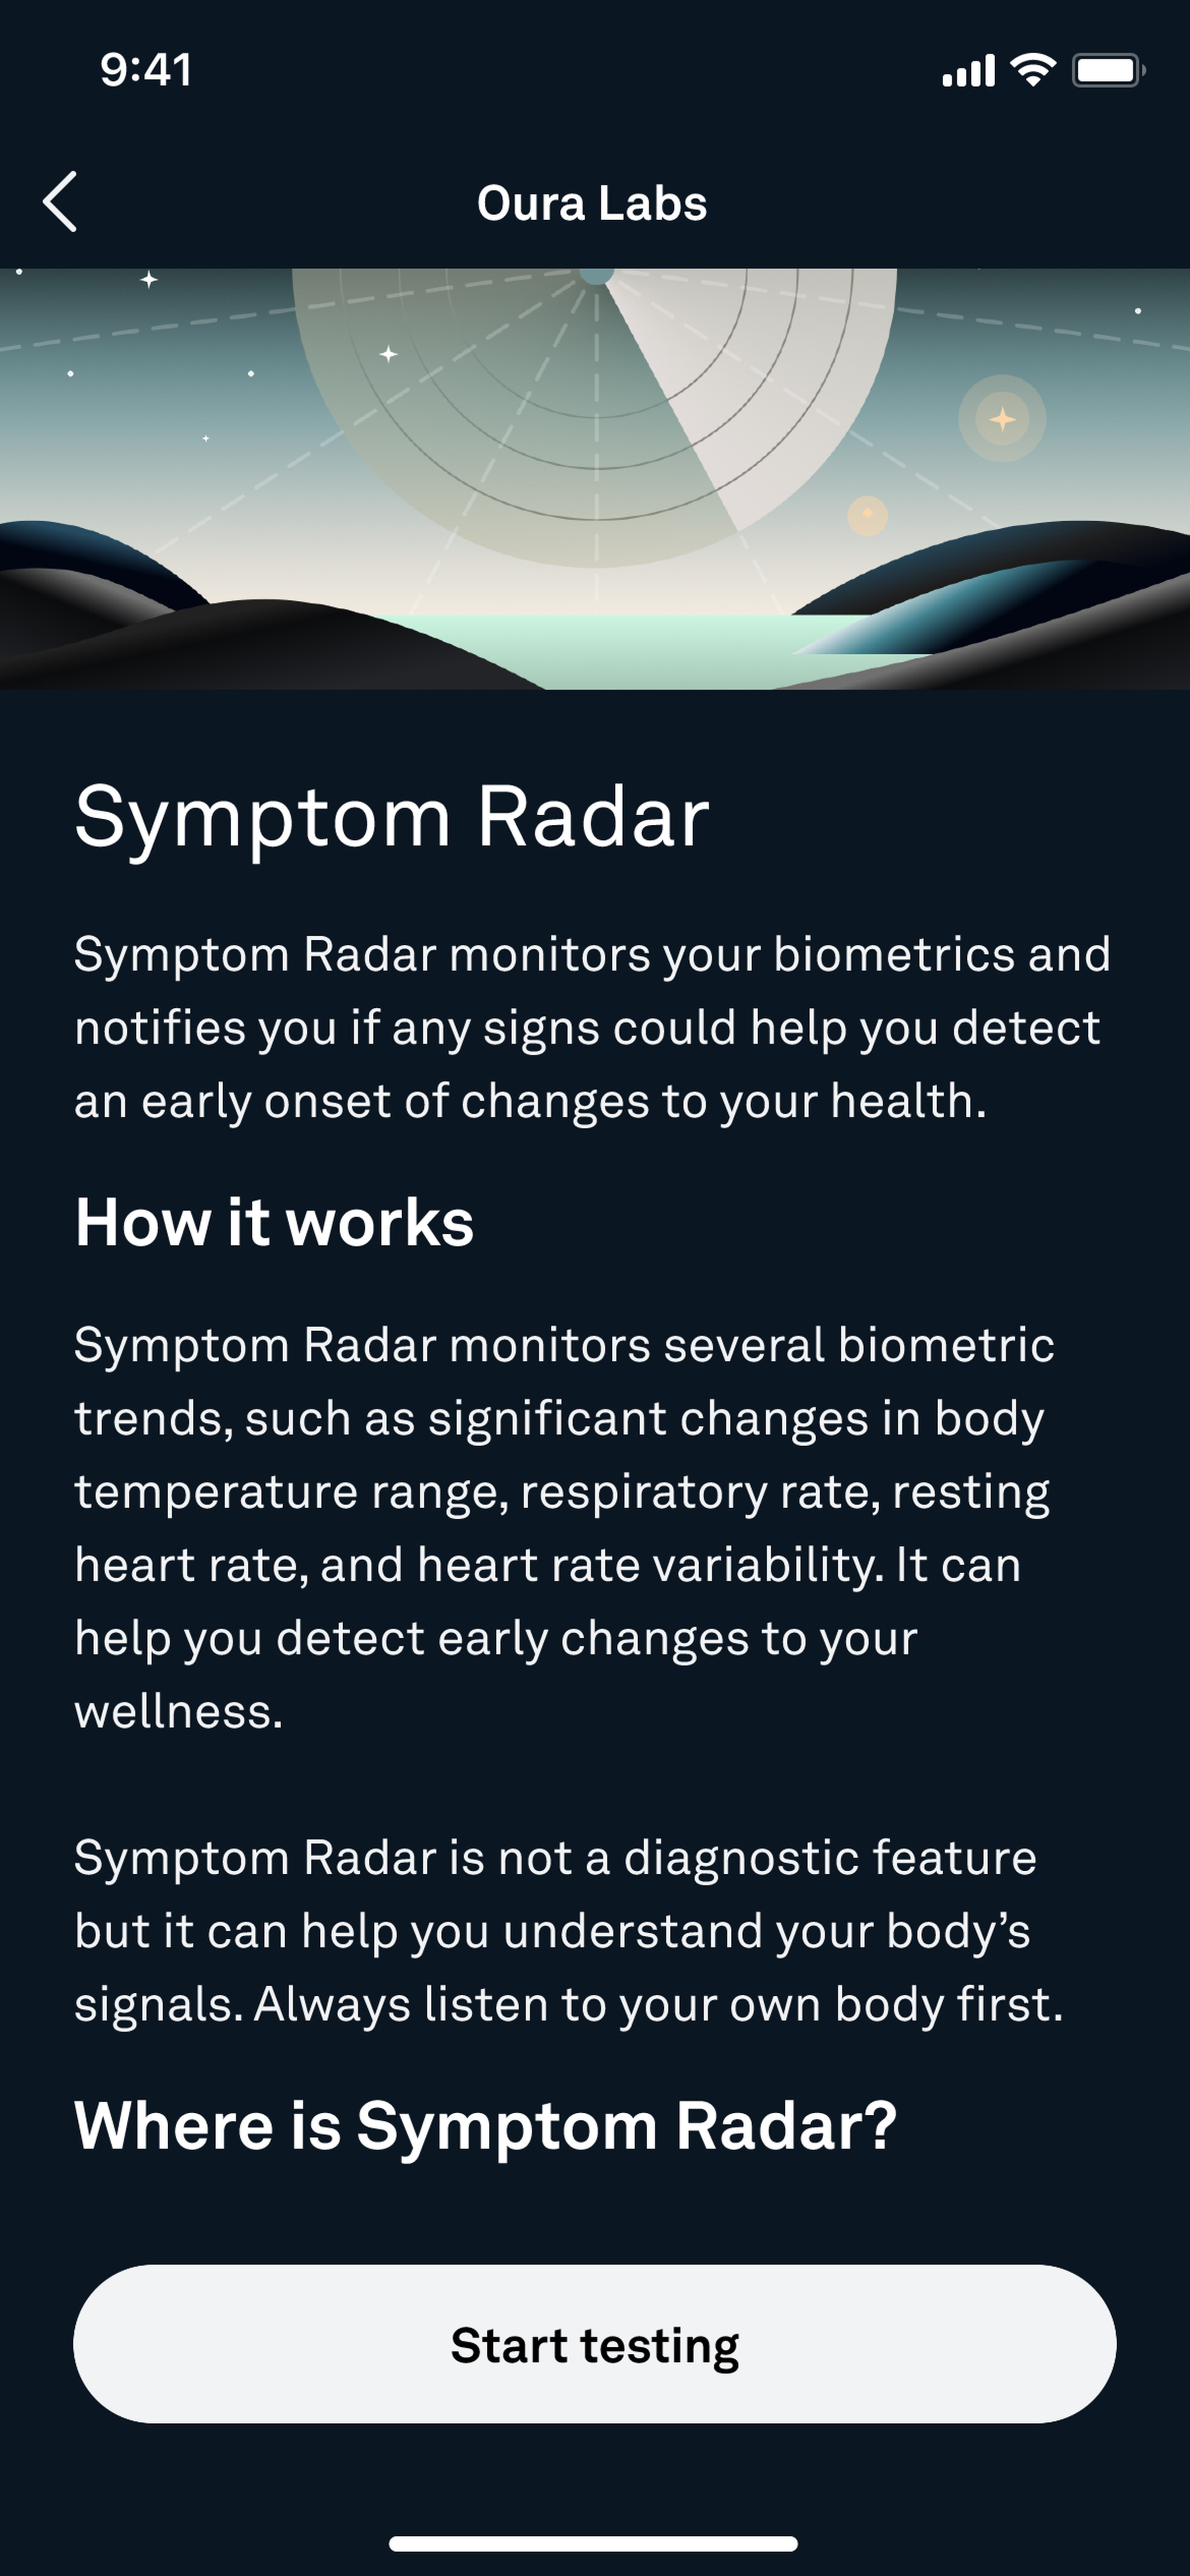 Screenshot of Oura Ring’s Symptom Radar feature